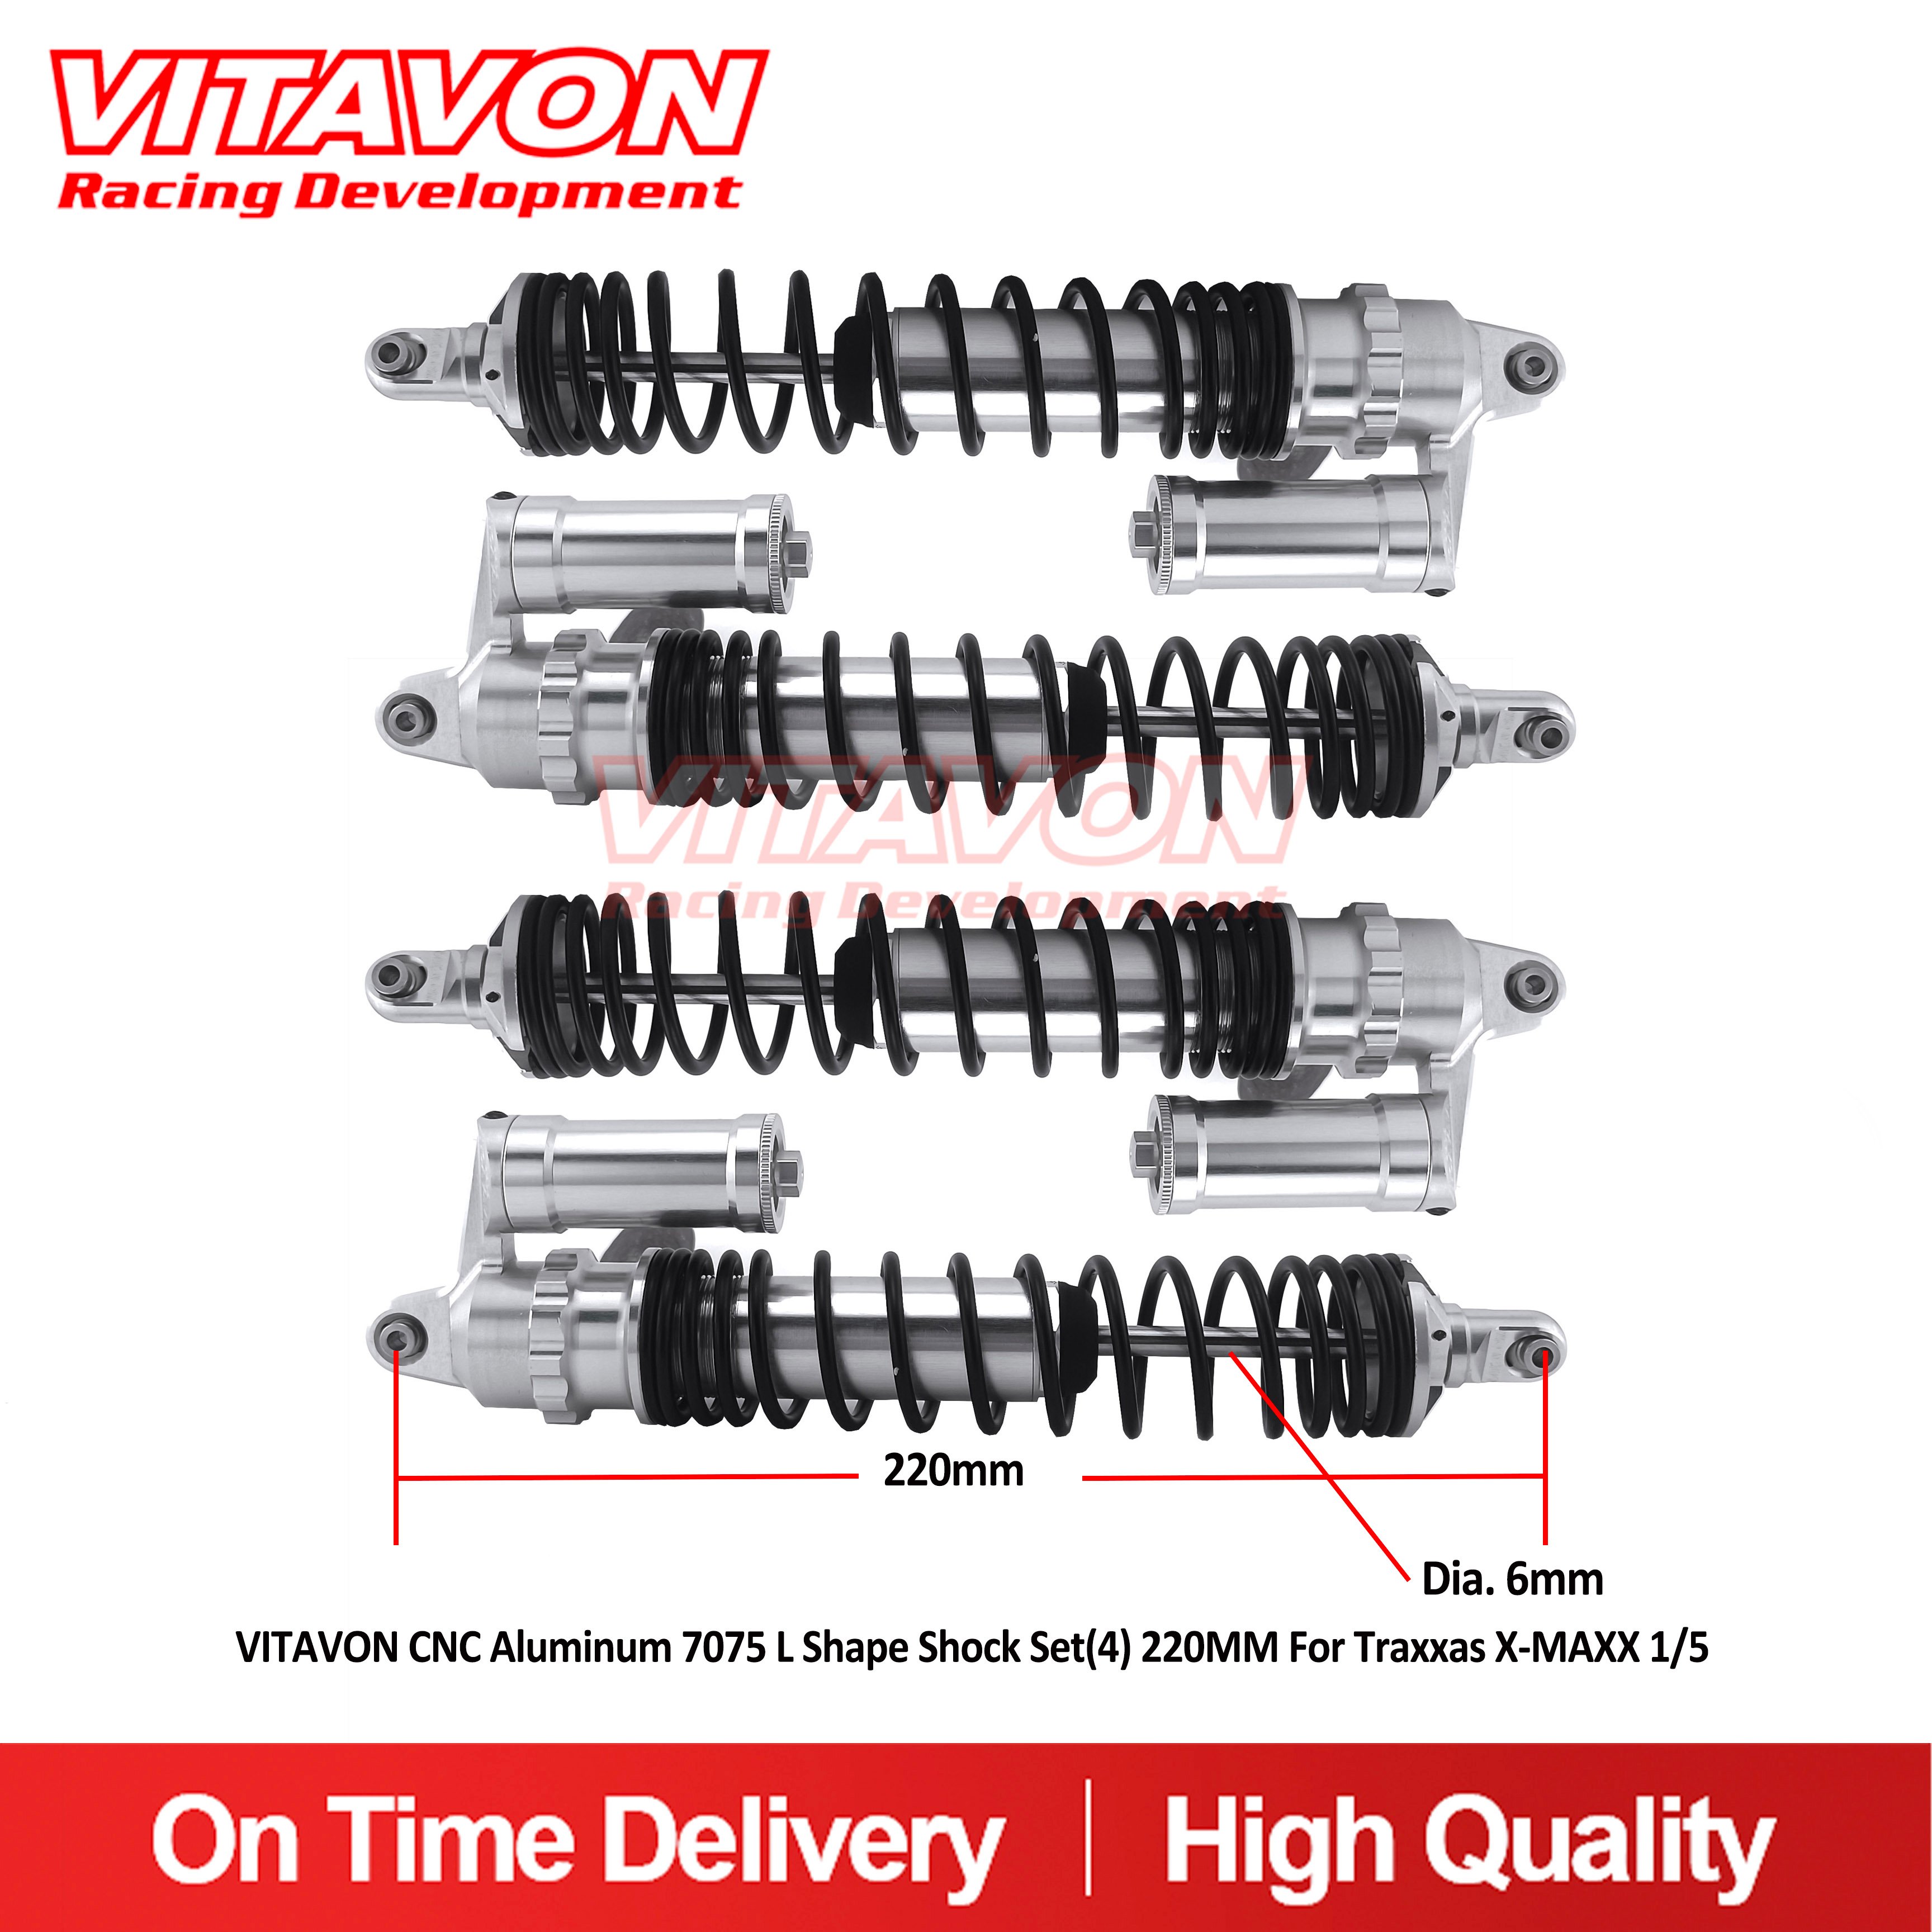 VITAVON CNC Aluminum 7075 L Shape Shock Set(4) 220MM For Traxxas X-MAXX 1/5